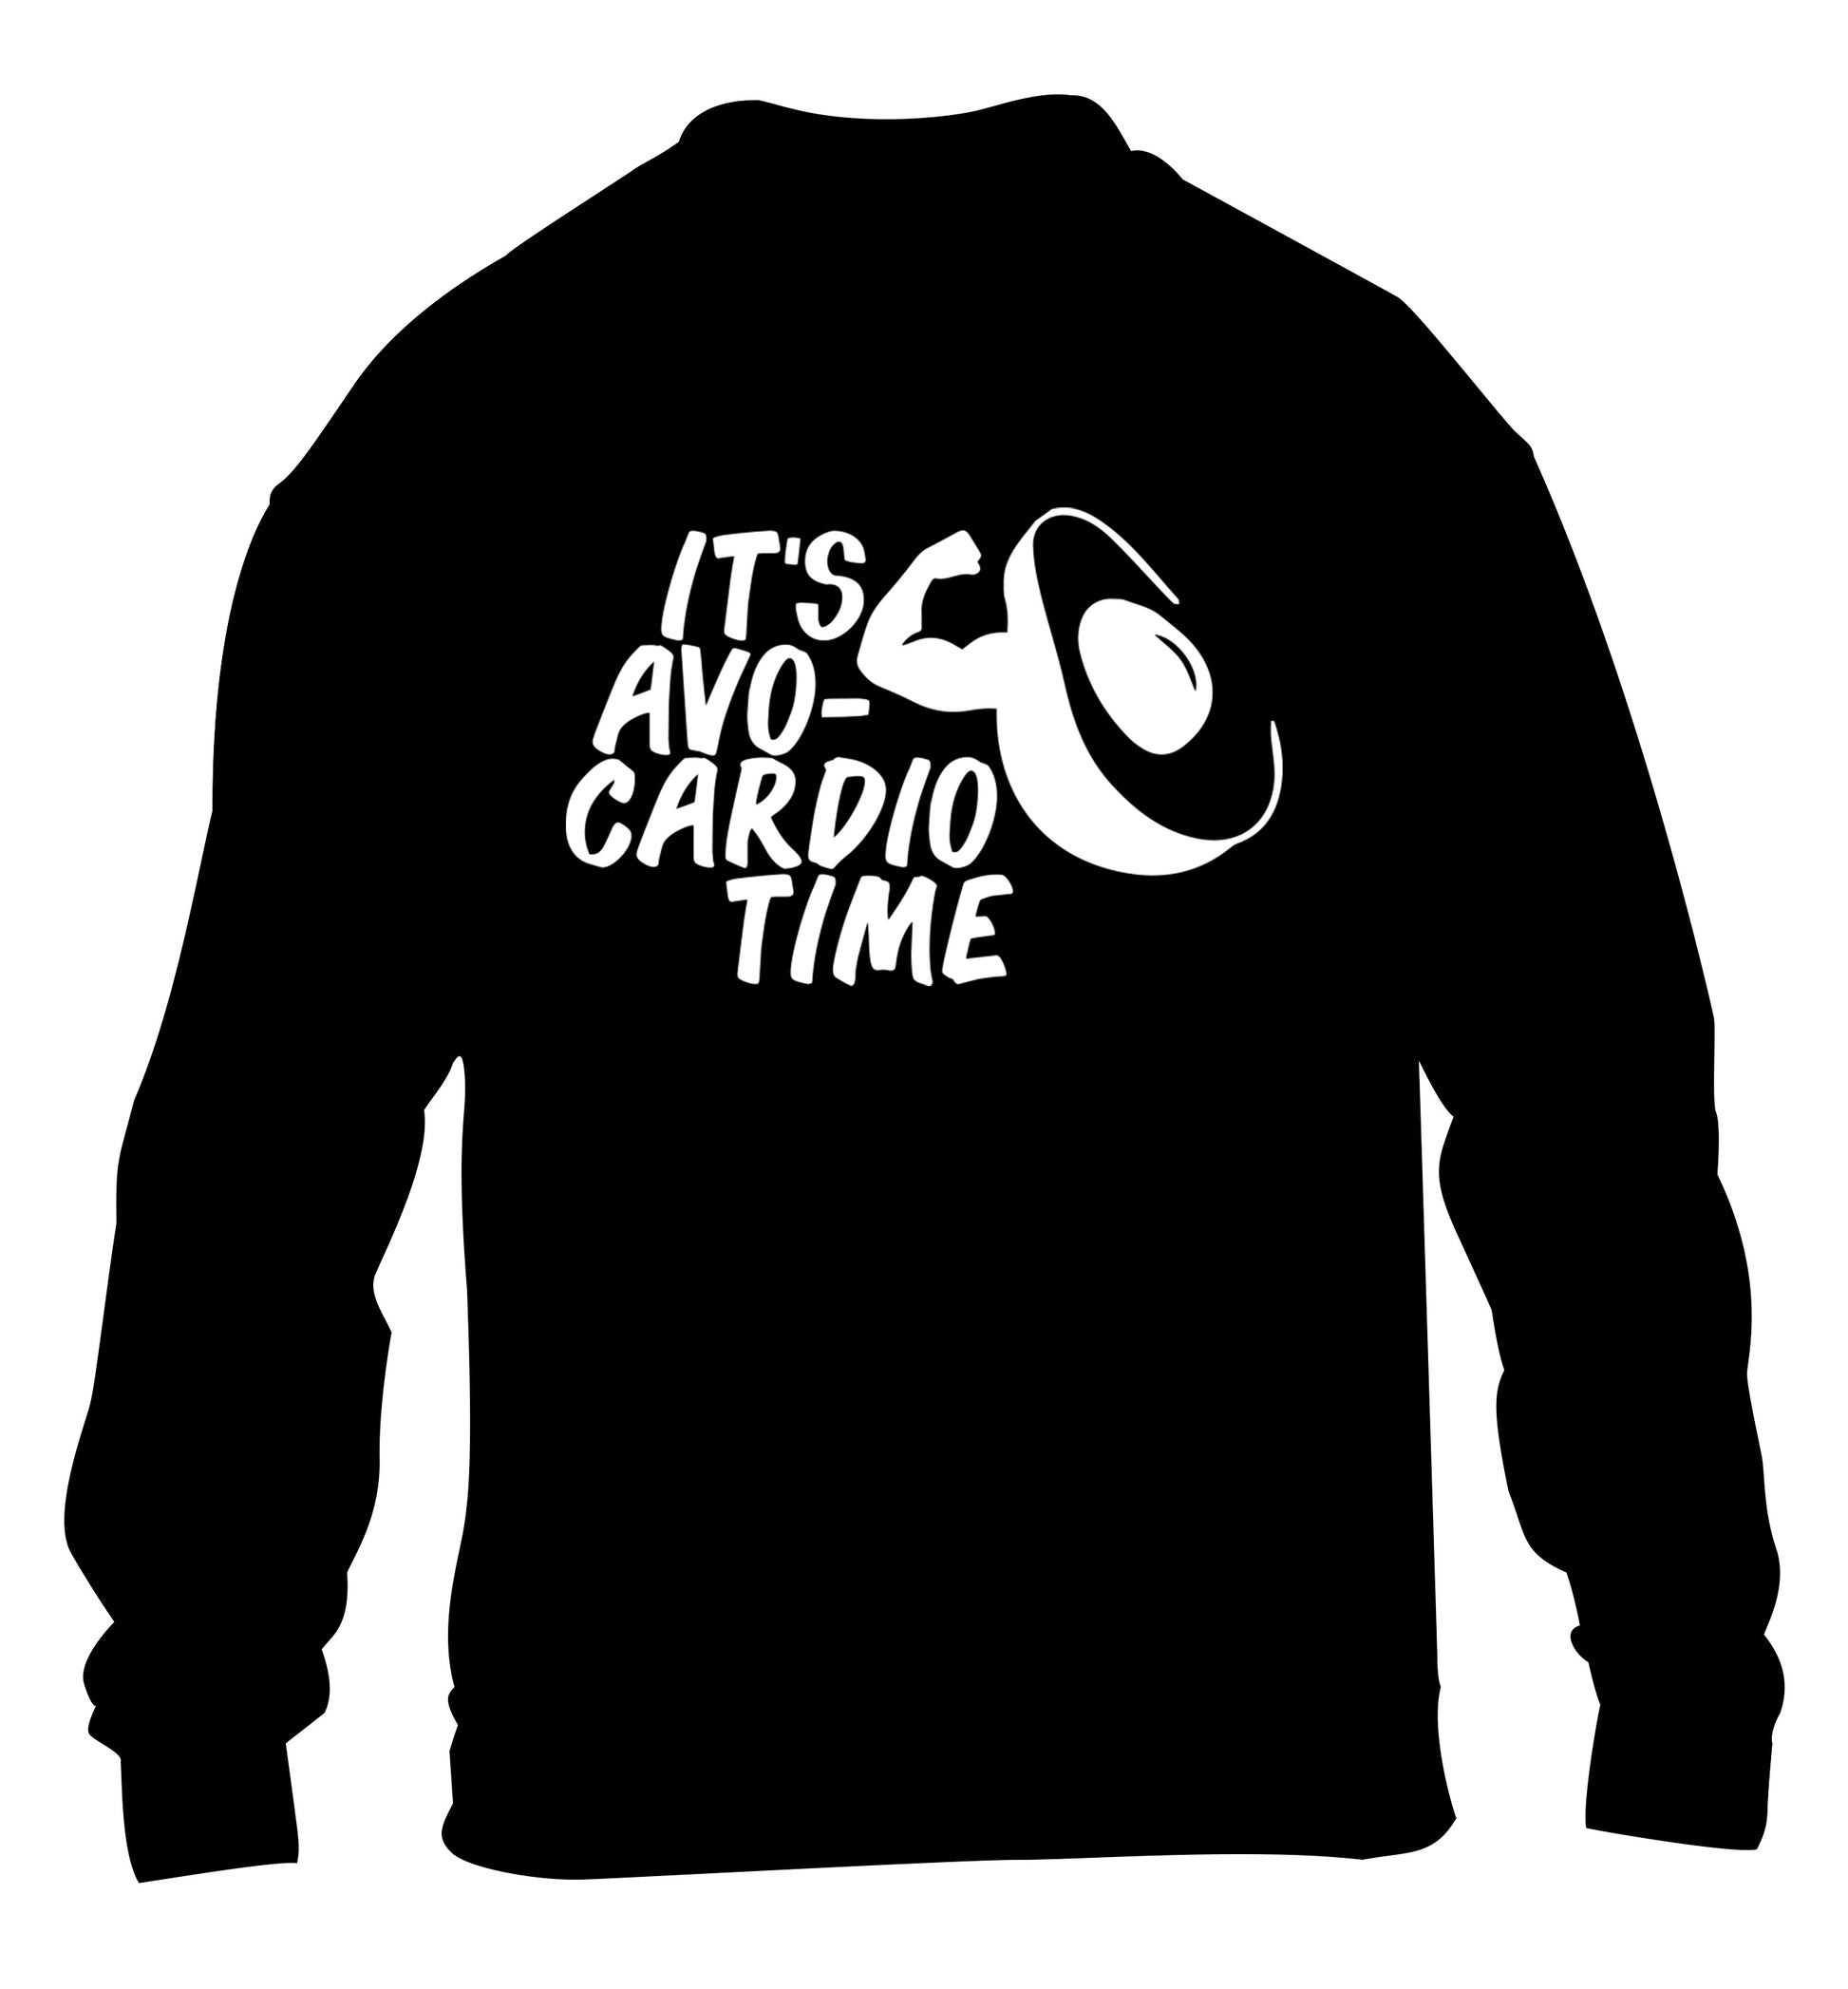 It's avo-cardio time children's black sweater 12-14 Years